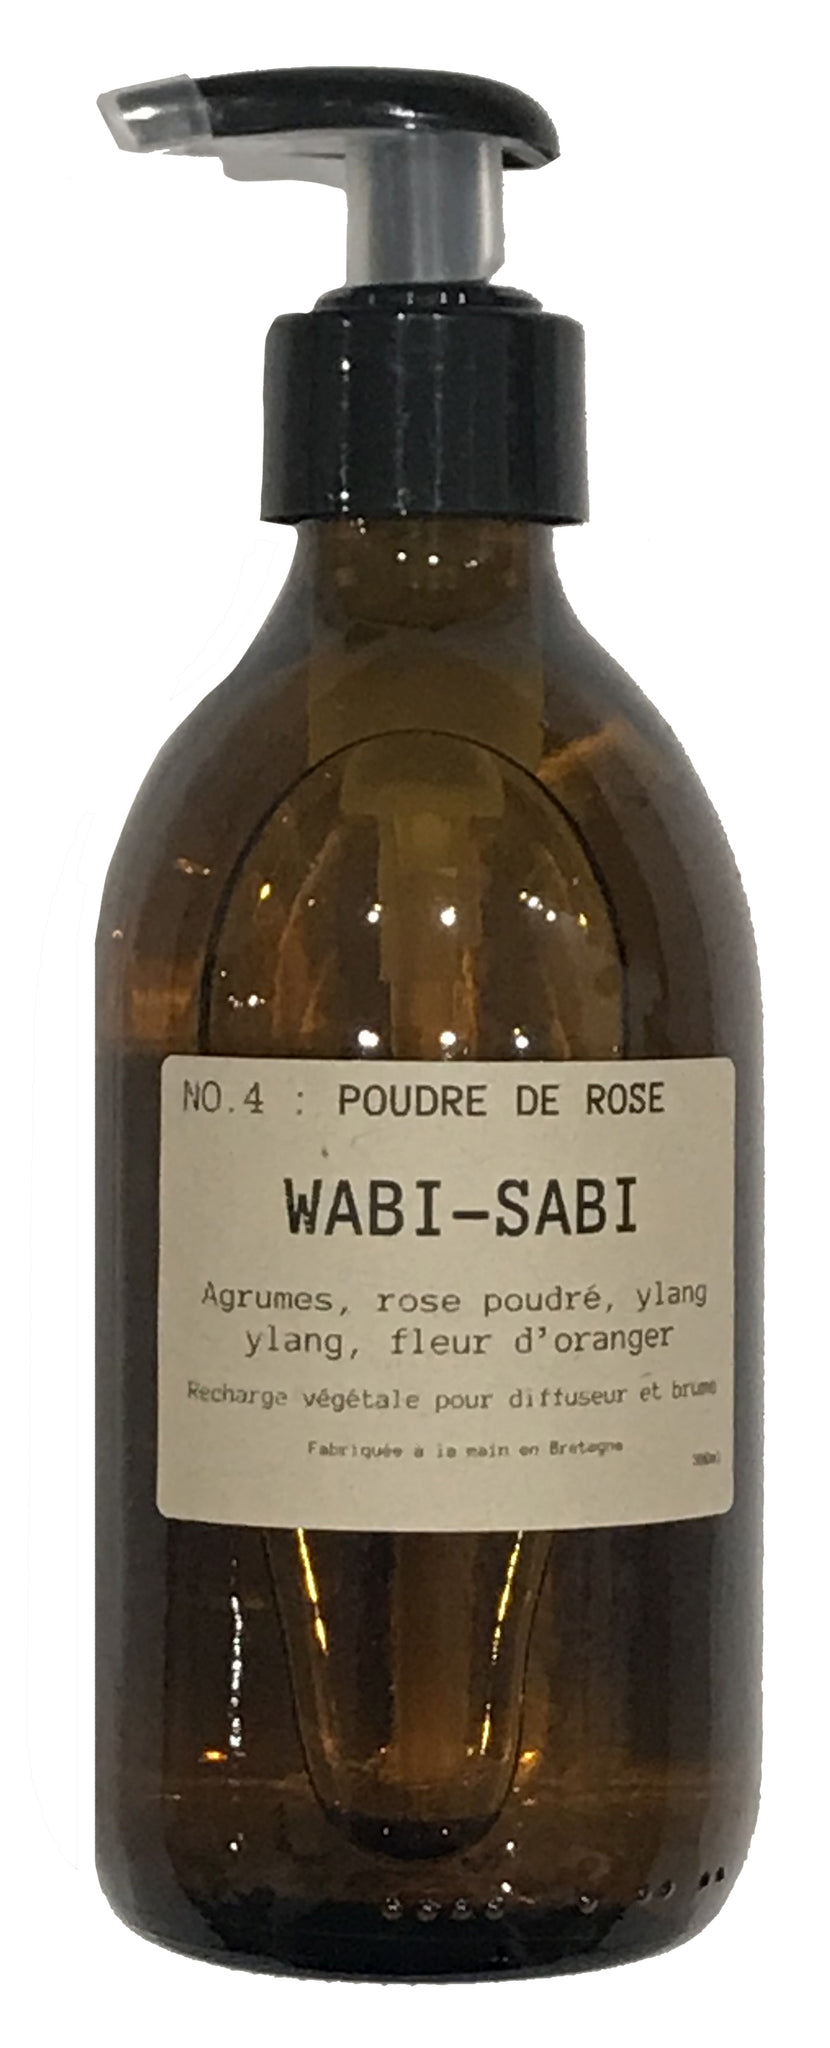 RECHARGE N°4 : POUDRE DE ROSE WABI SABI